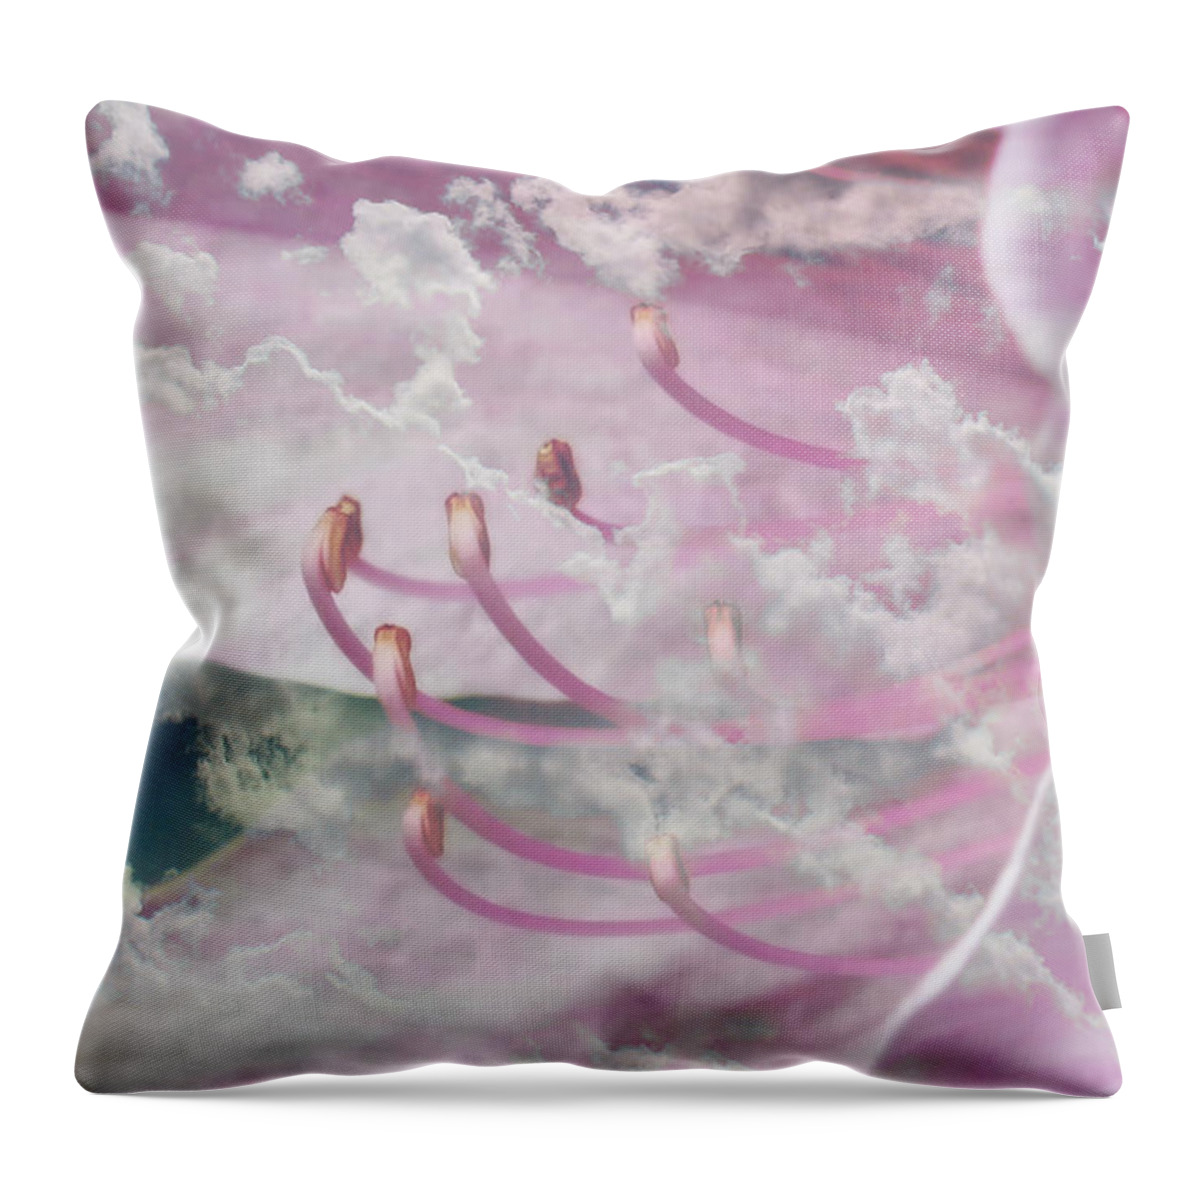 Azalea Throw Pillow featuring the photograph Heavenly Pink Azalea by Carol Groenen